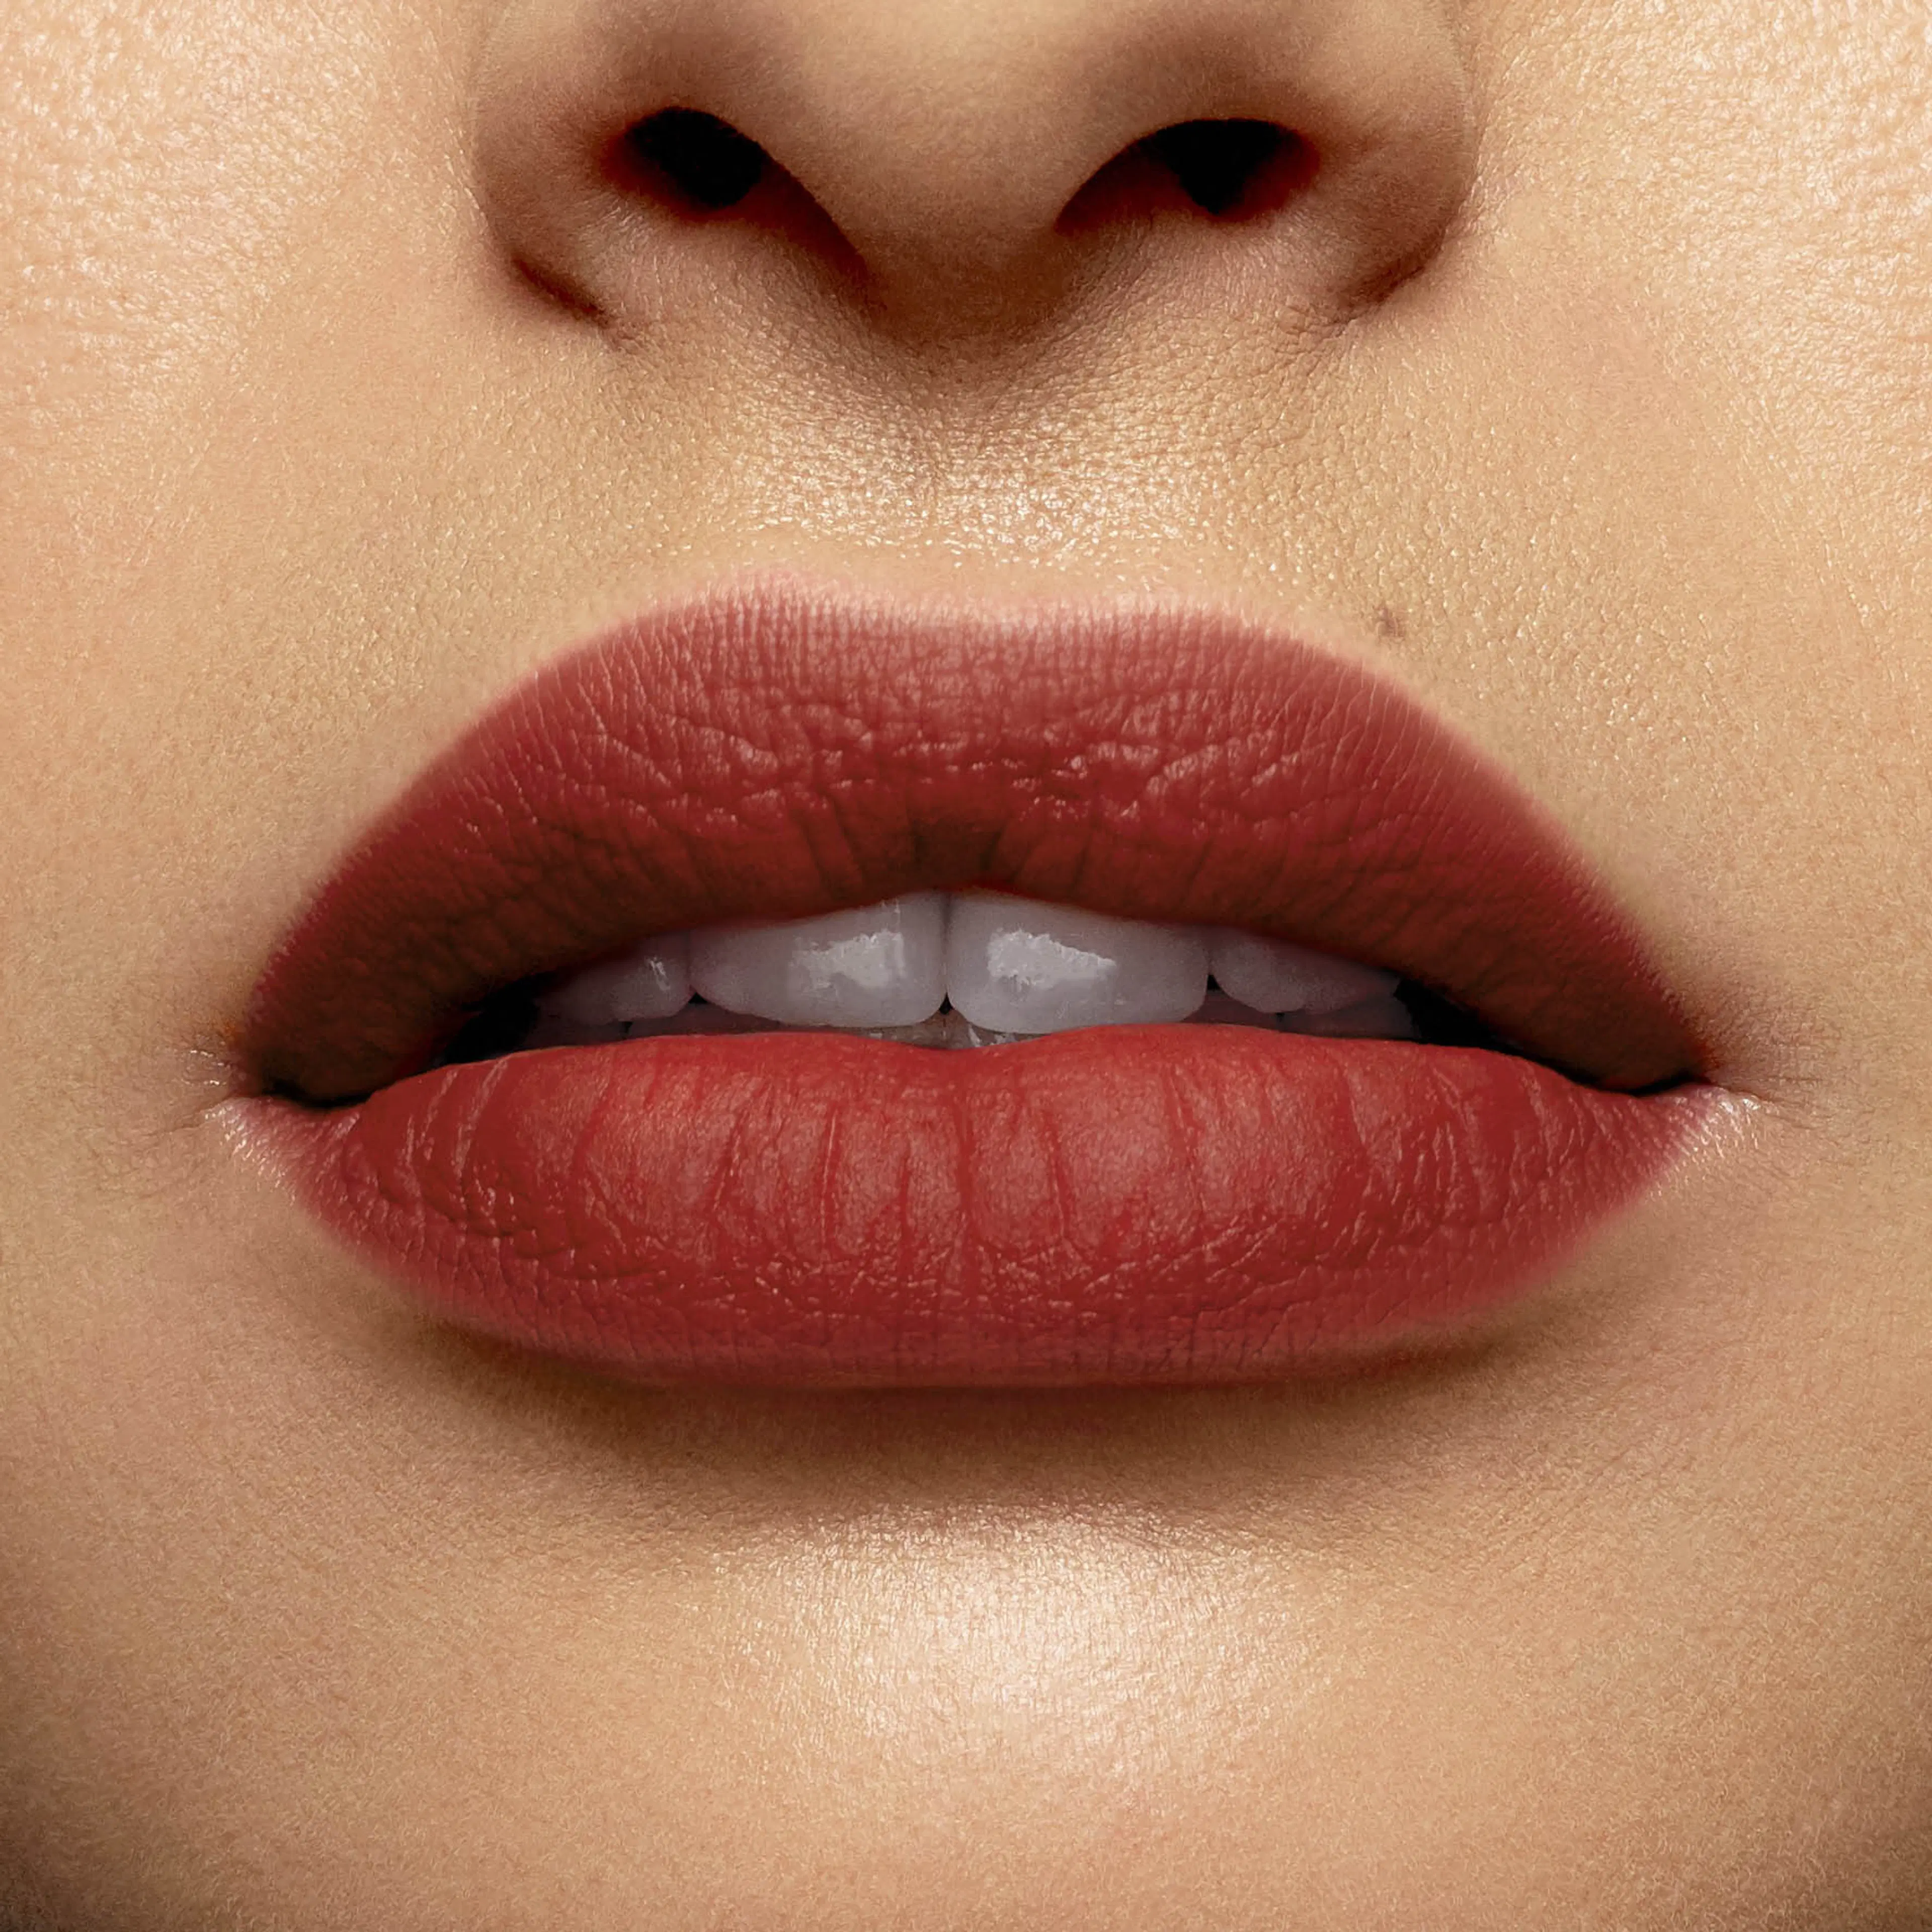 Lancôme L'Absolu Rouge Intimatte Lipstick huulipuna 3,2 g